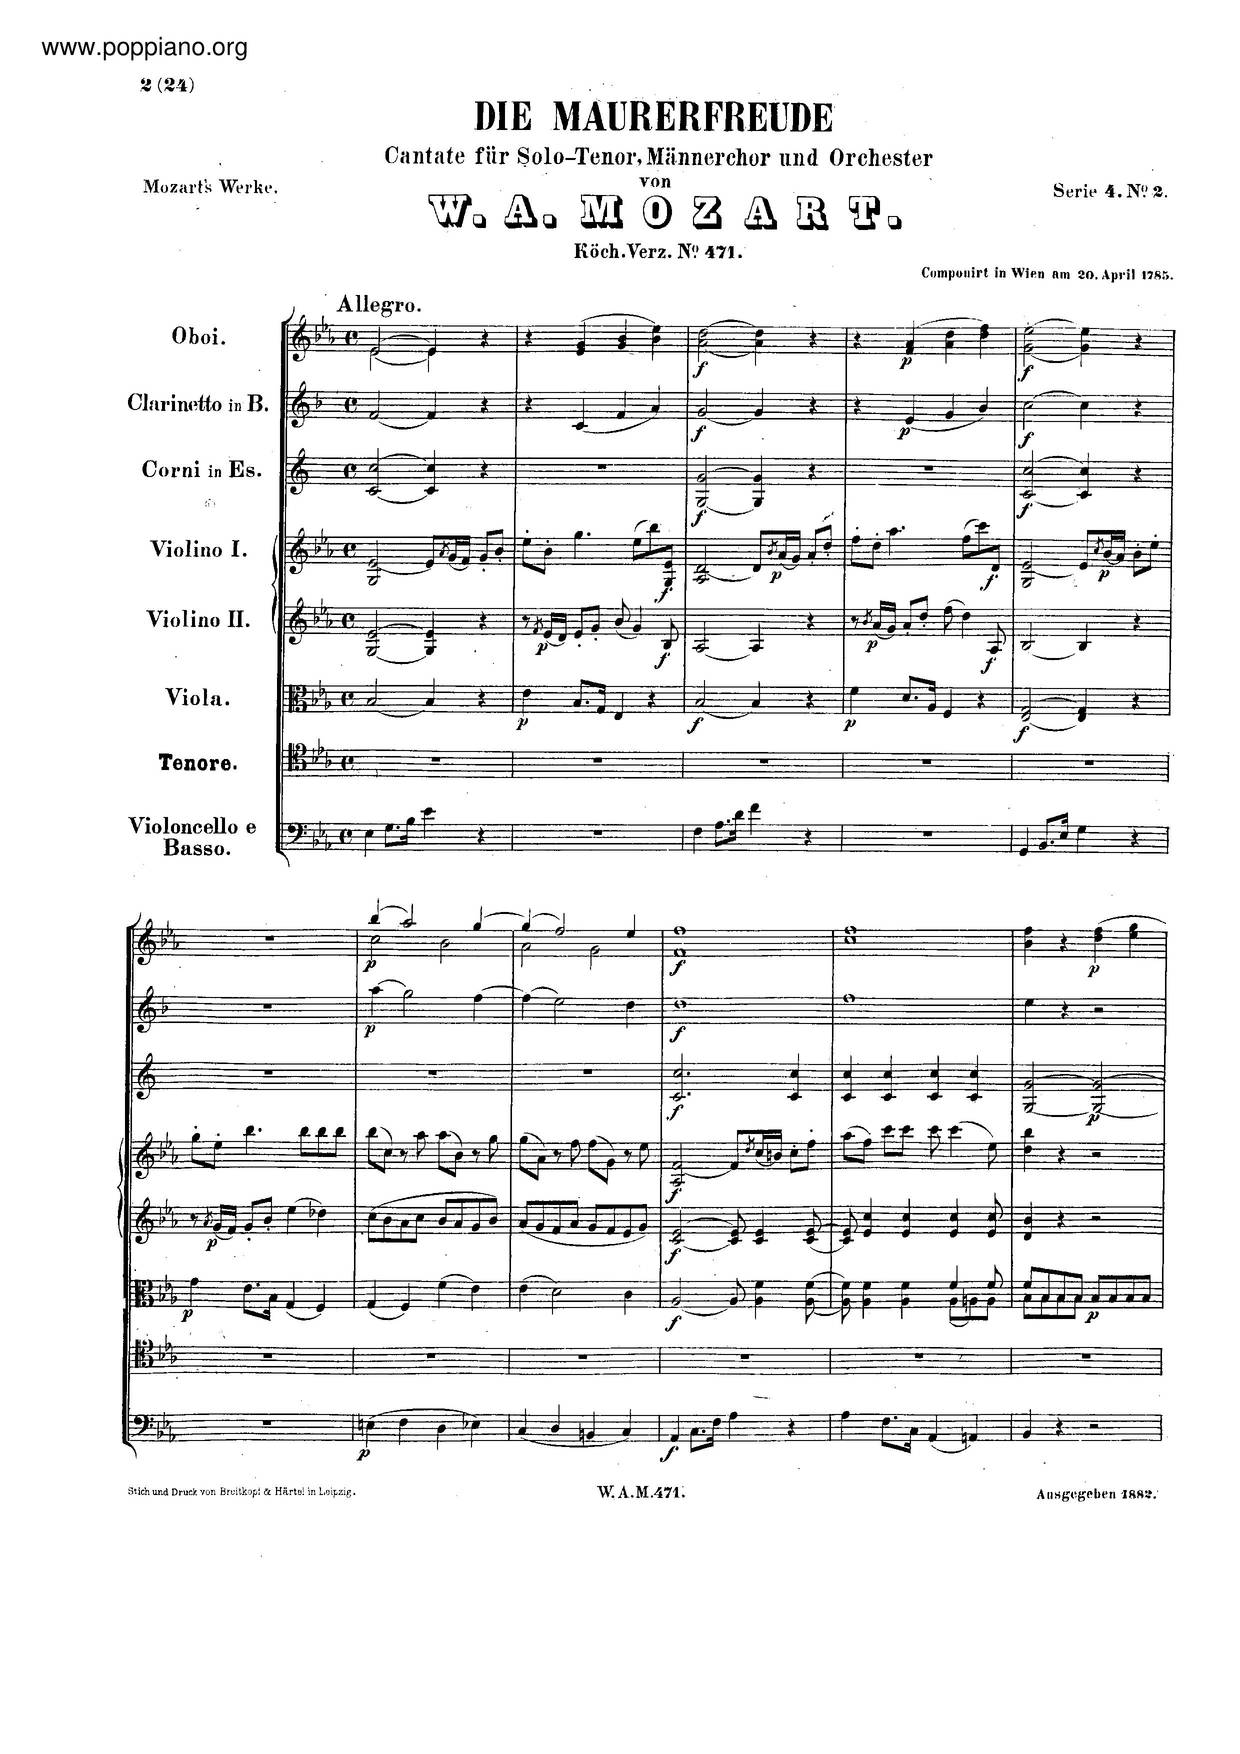 Die Maurerfreude, K. 471ピアノ譜